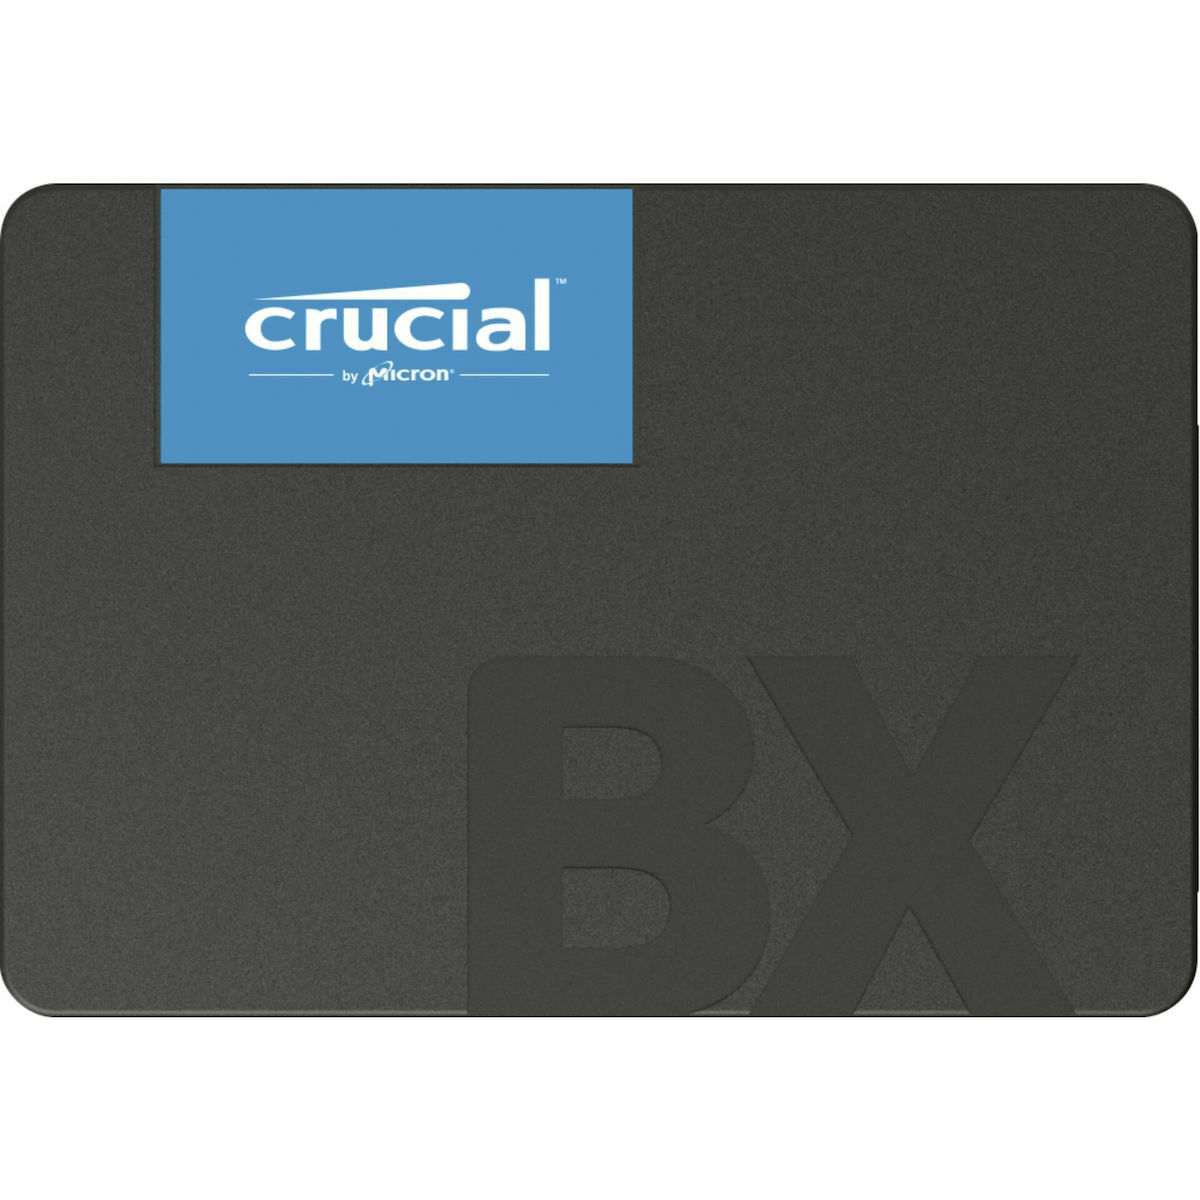 Crucial BX500 SSD 500GB 2.5” SATA III